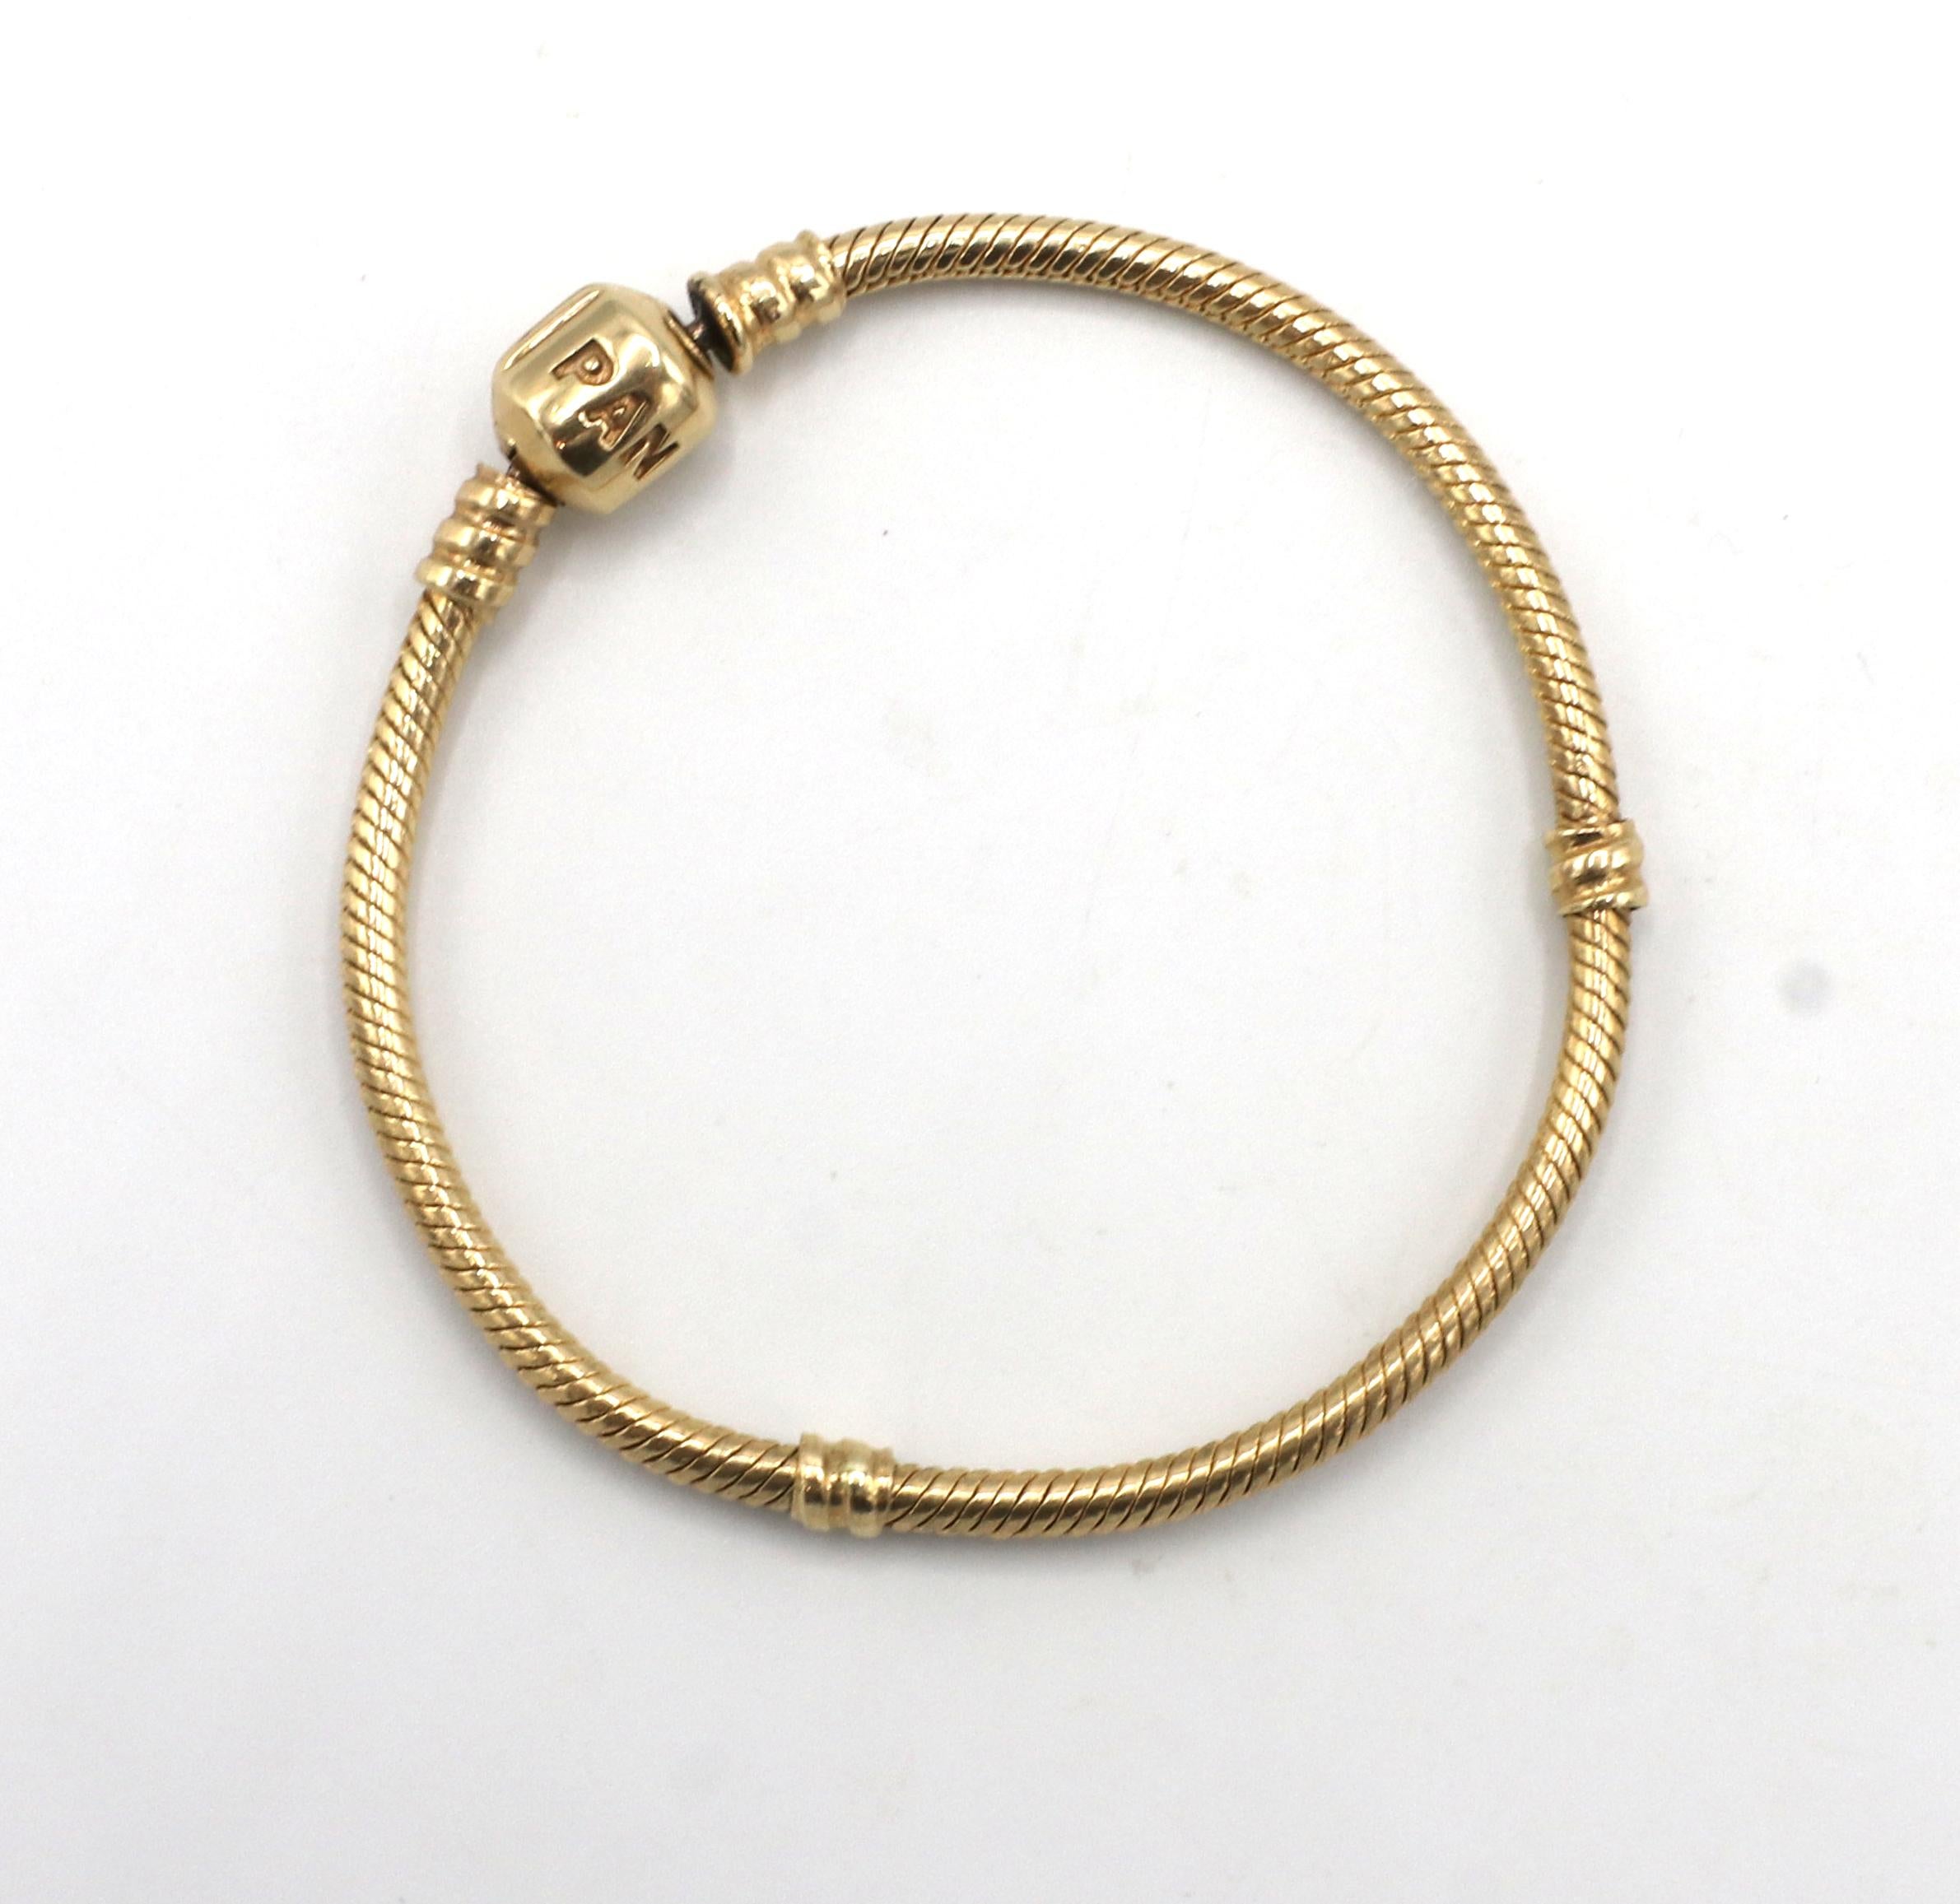 Pandora 14 Karat Gold Moments Snake Chain Bracelet 
Metal: 14k yellow gold
Weight: 15.4 grams
Length: 6.7 inches
Width: 3mm
Retail: $1,925 USD
